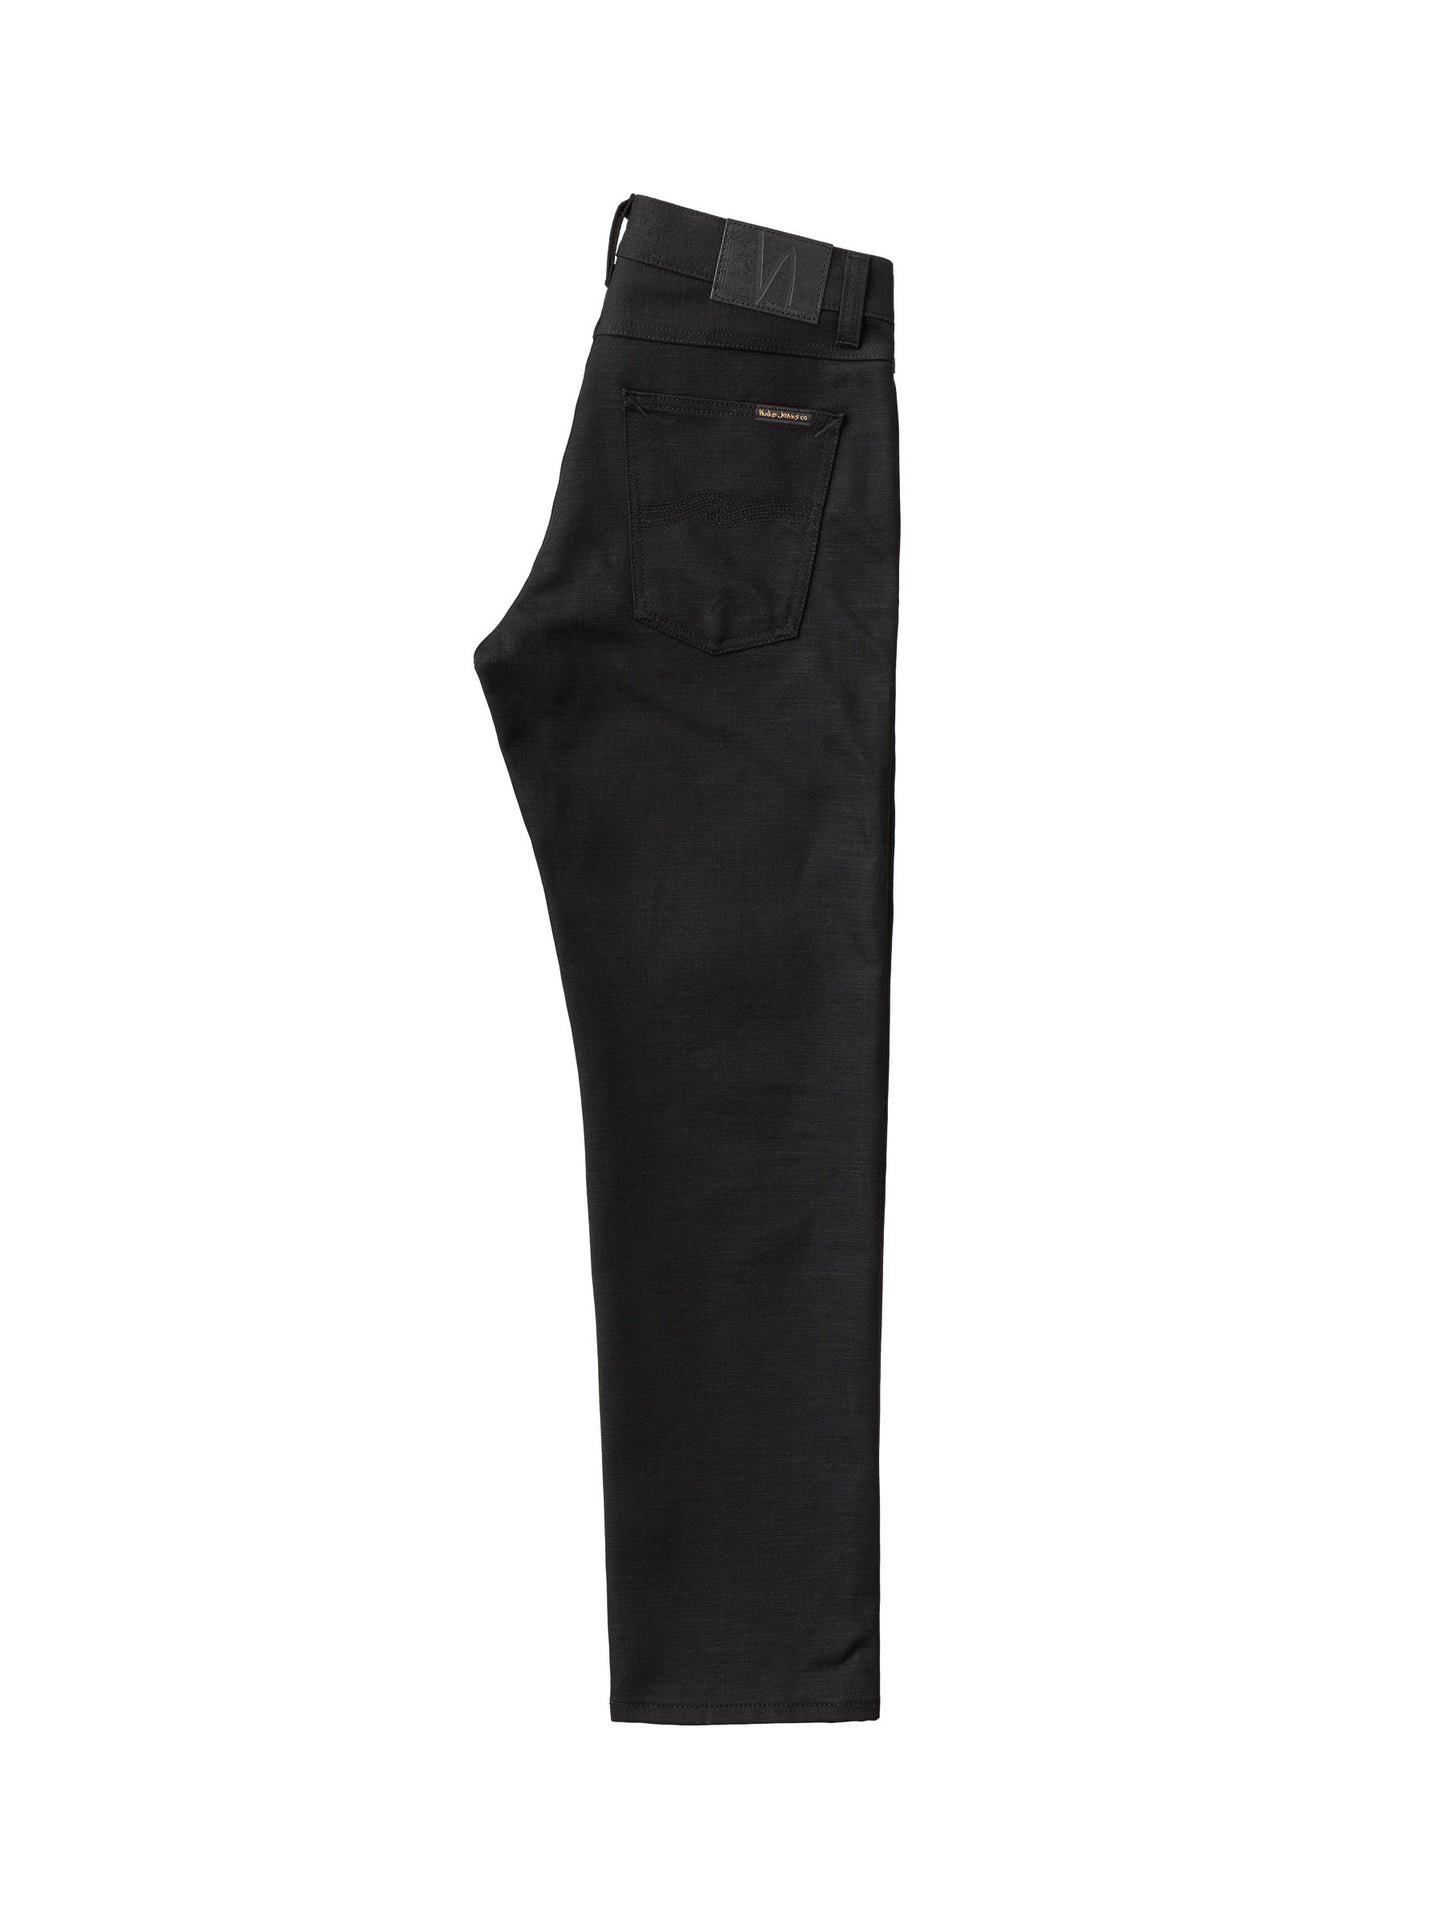 Nudie Jeans Gritty Jackson Jean L32 Dry Black